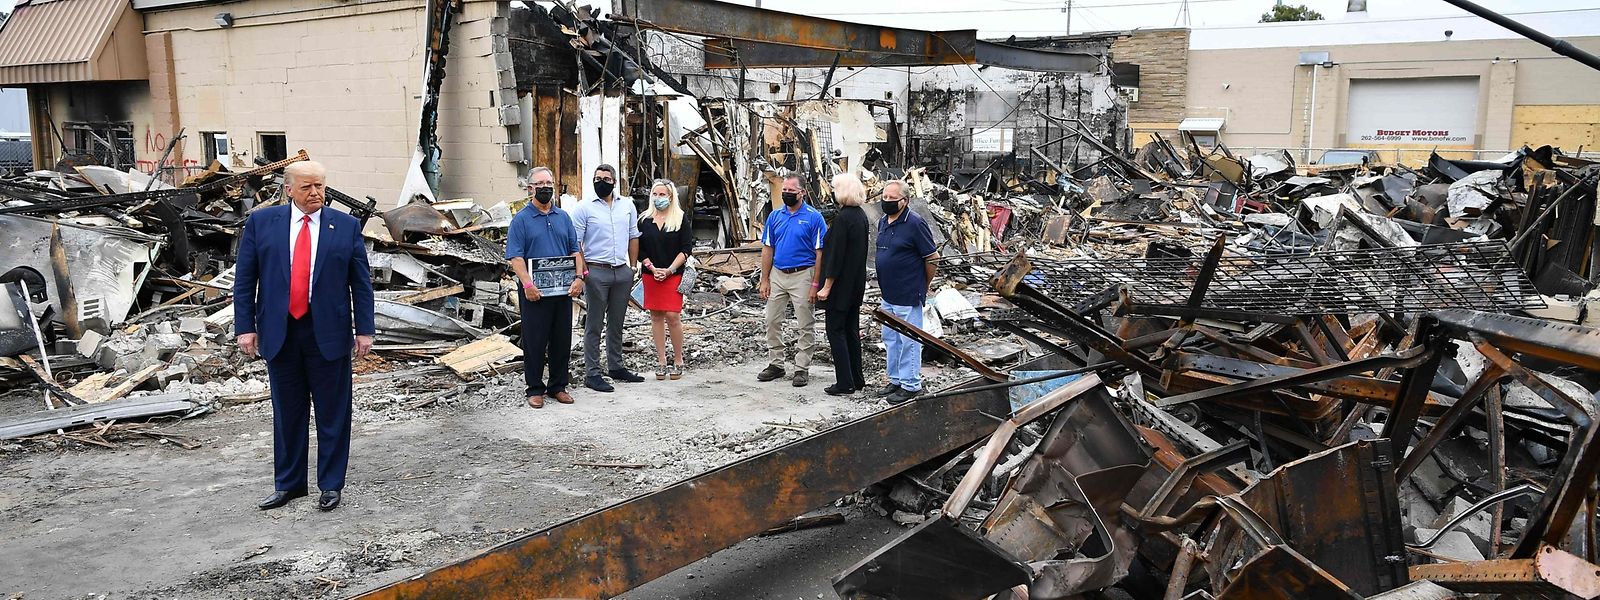 US-Präsident inspiziert bei Unruhen beschädigte Gebäude in Kenosha. 